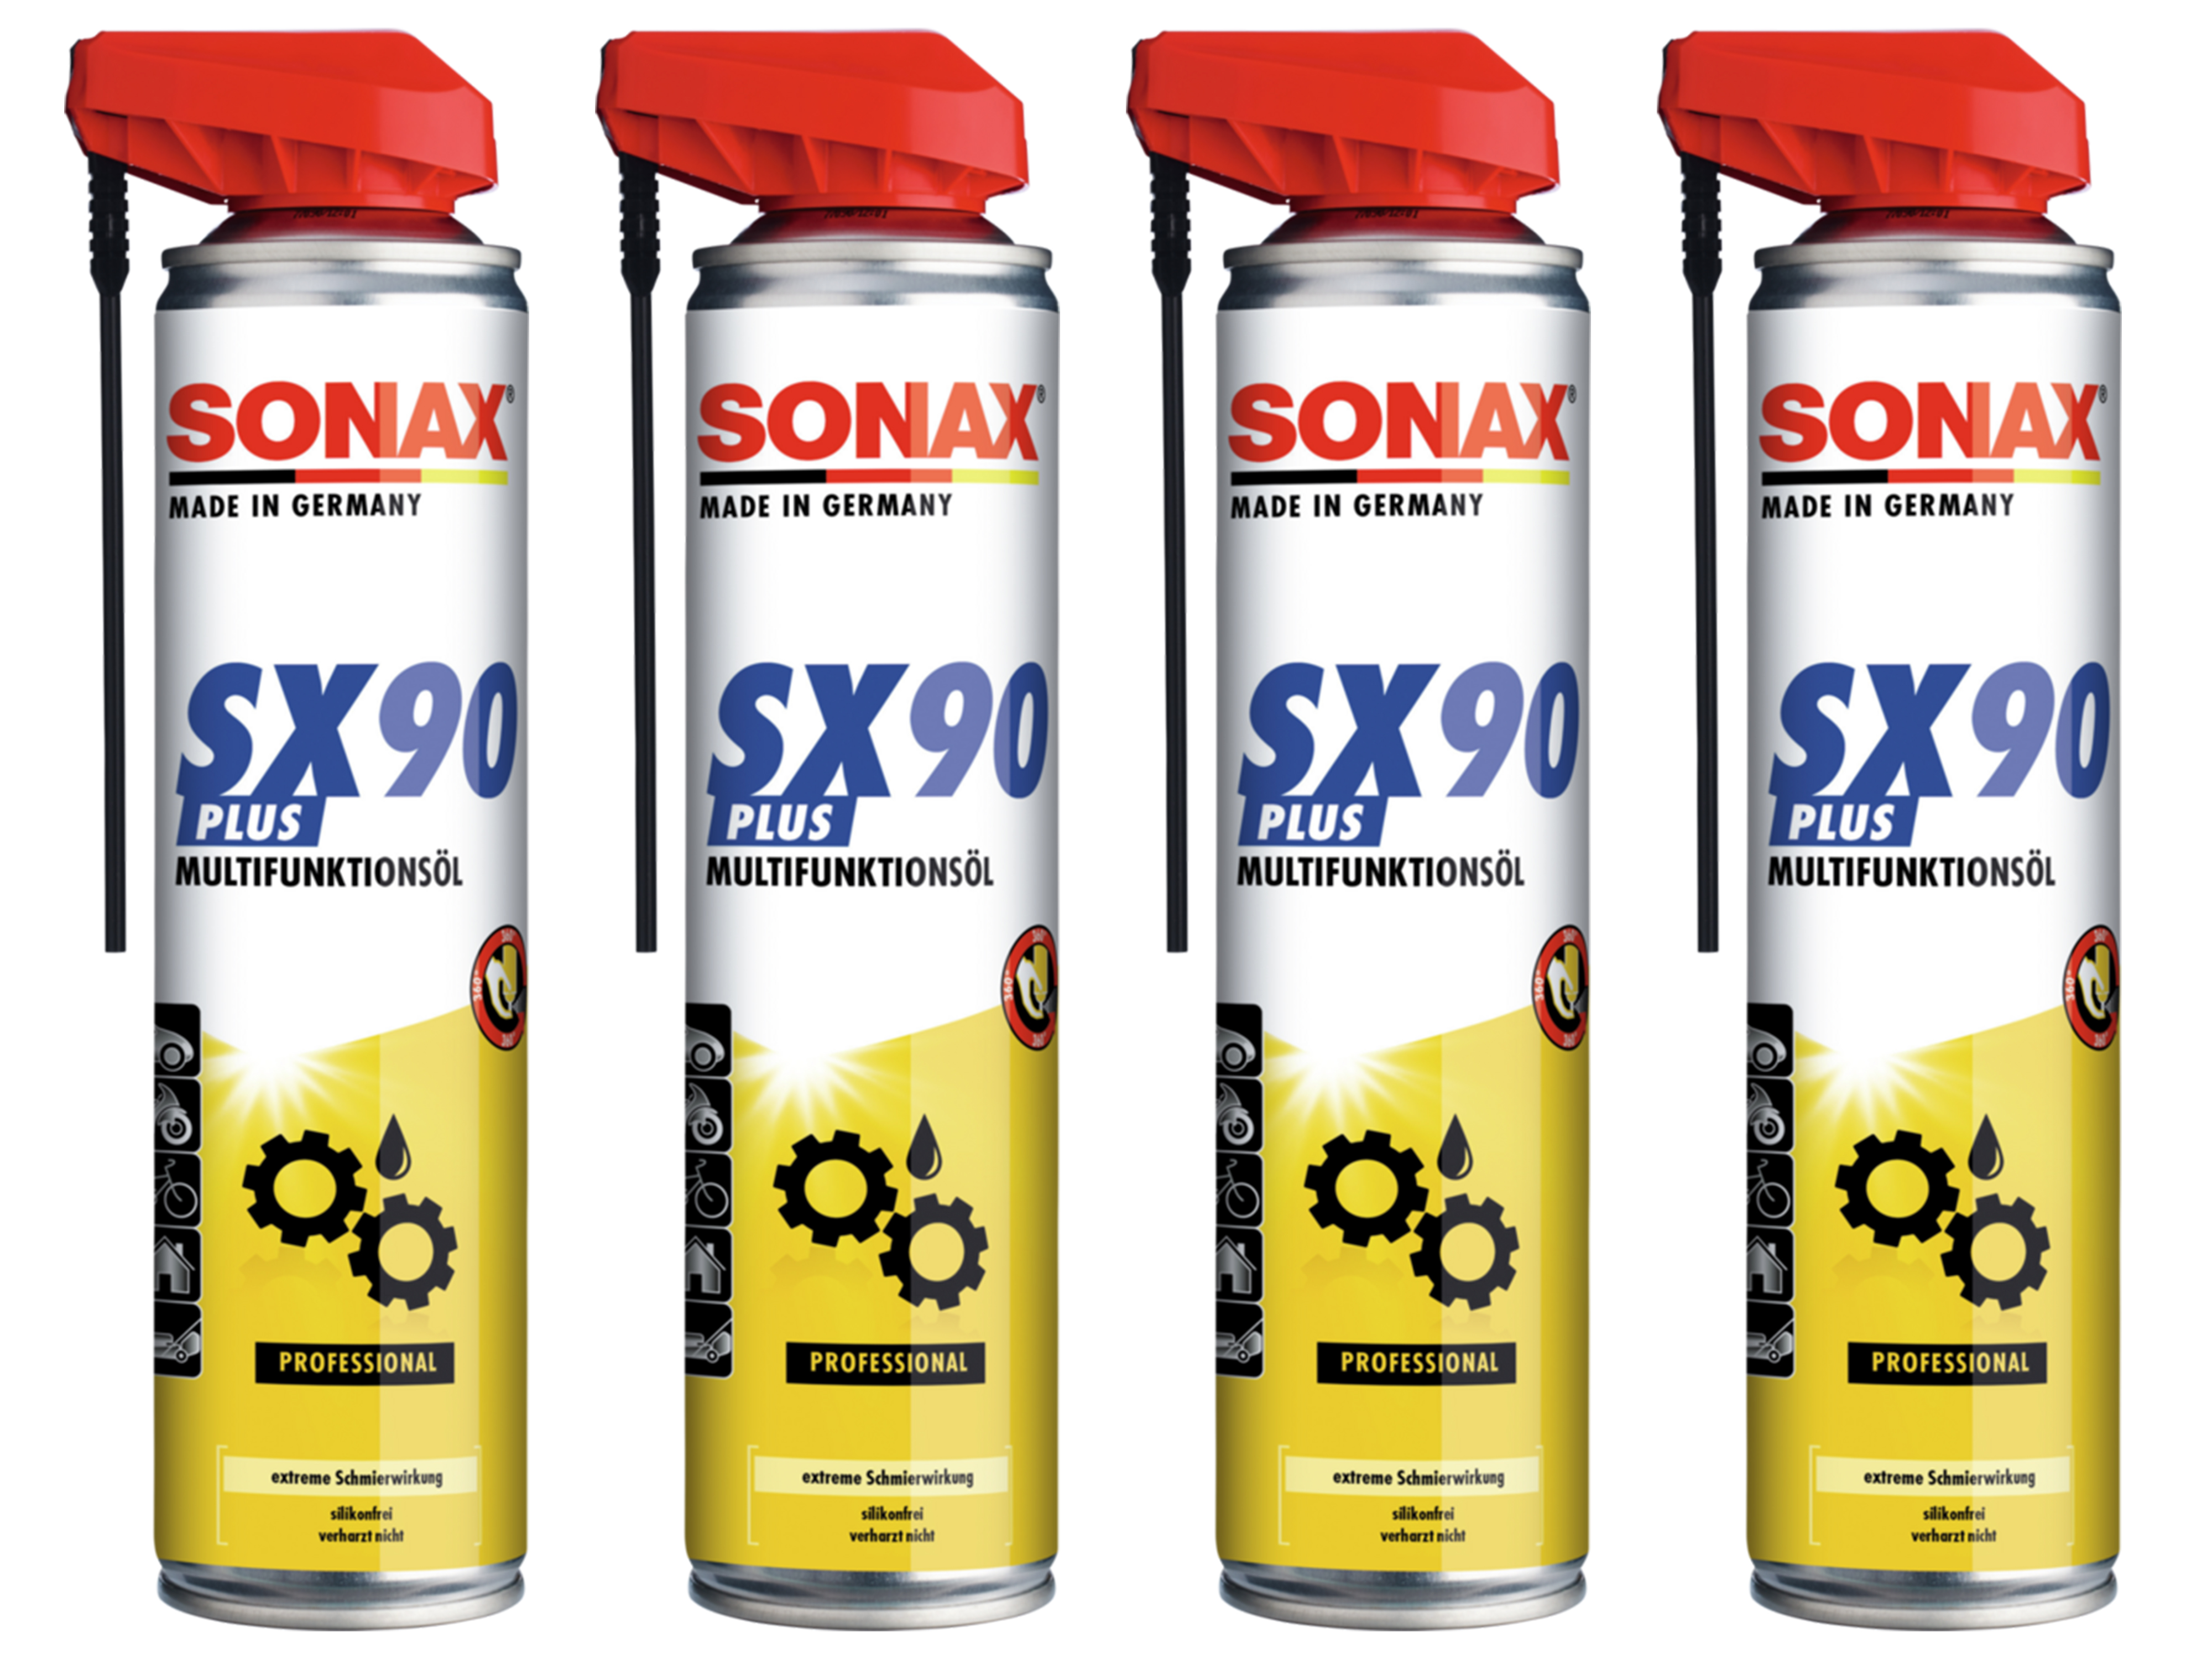 SONAX Multifunktionsöl, SX90 PLUS EasySpray, 400 ml, 4 Stück